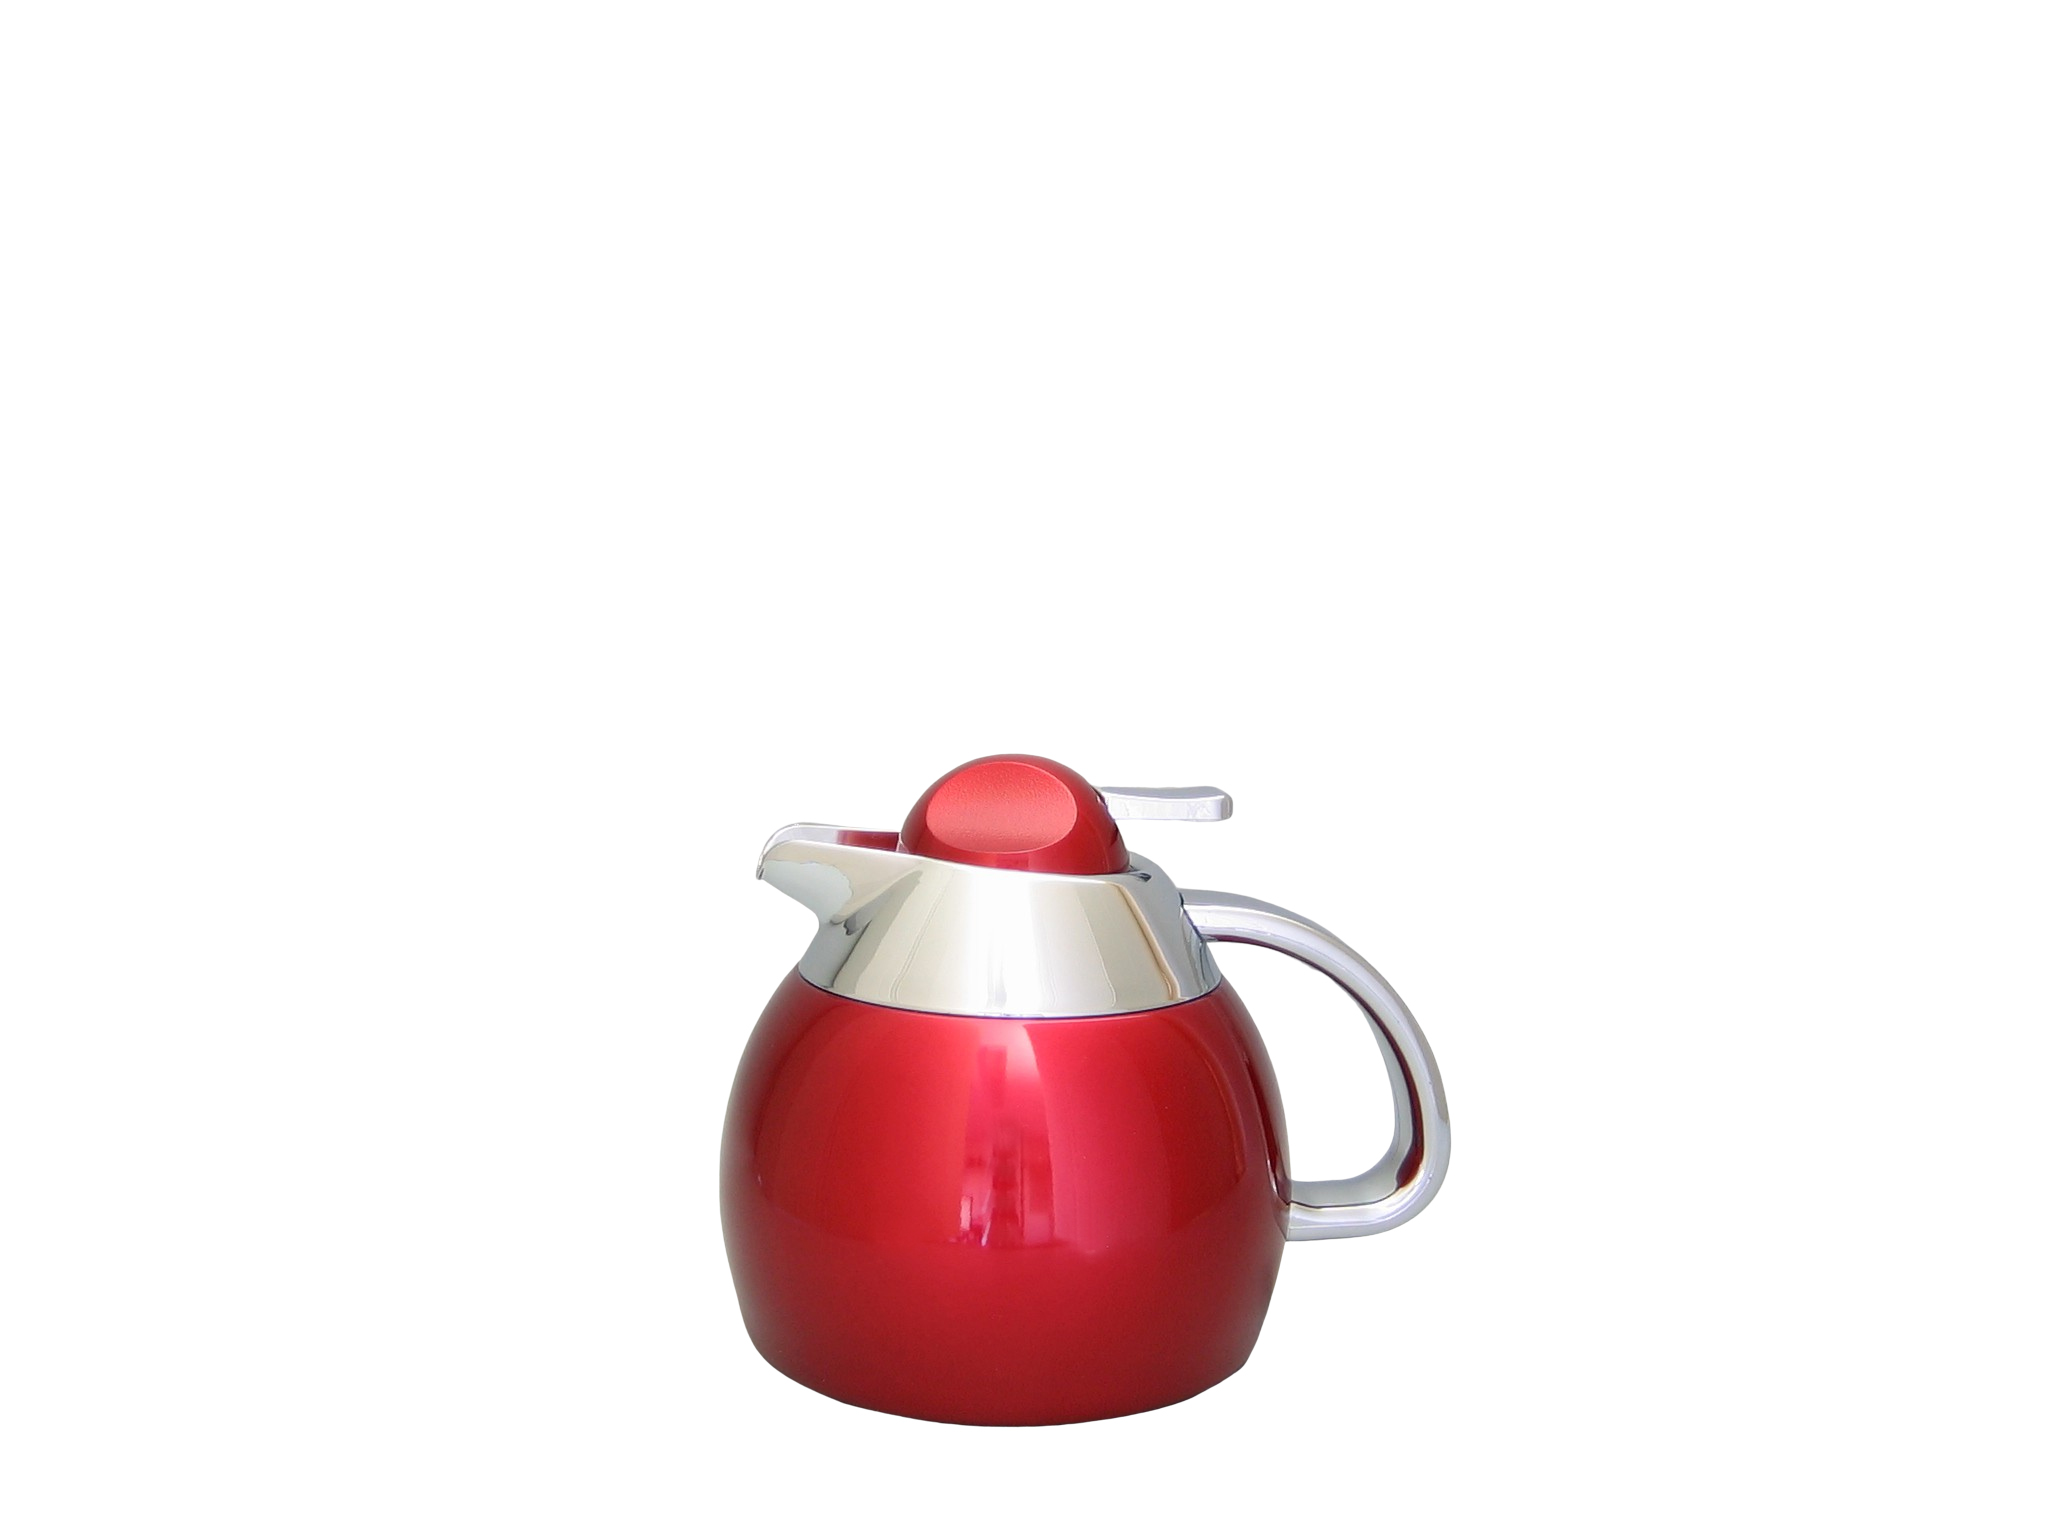 OPERA06-072 - Vacuum carafe SS unbreakable red 0.6 L - Isobel